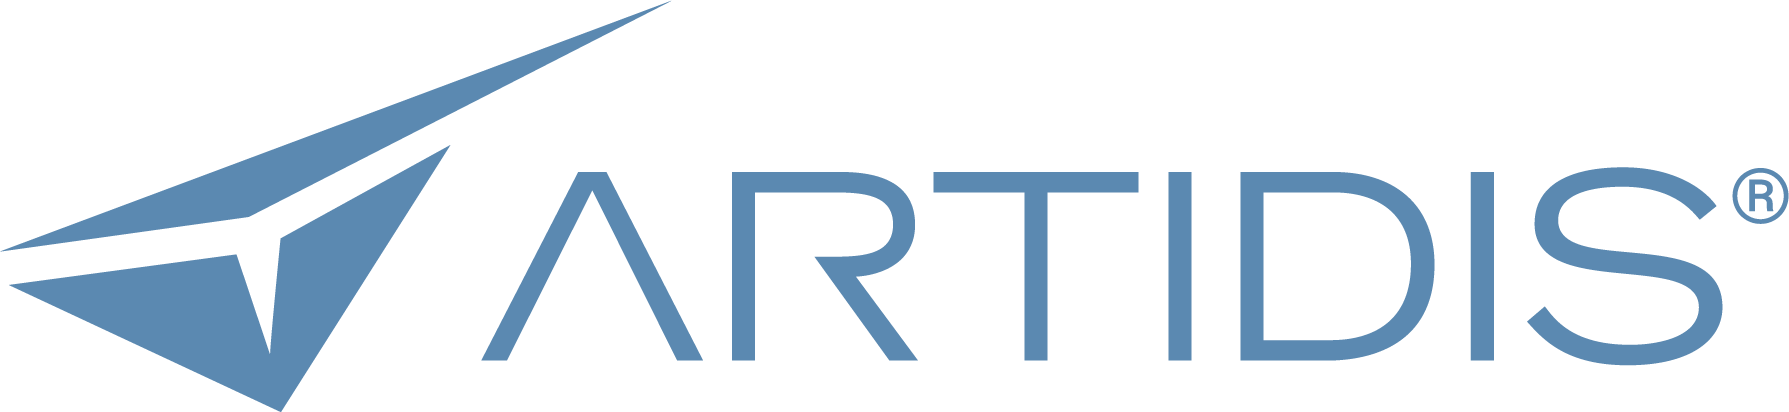 Artidis-Logo_Blue